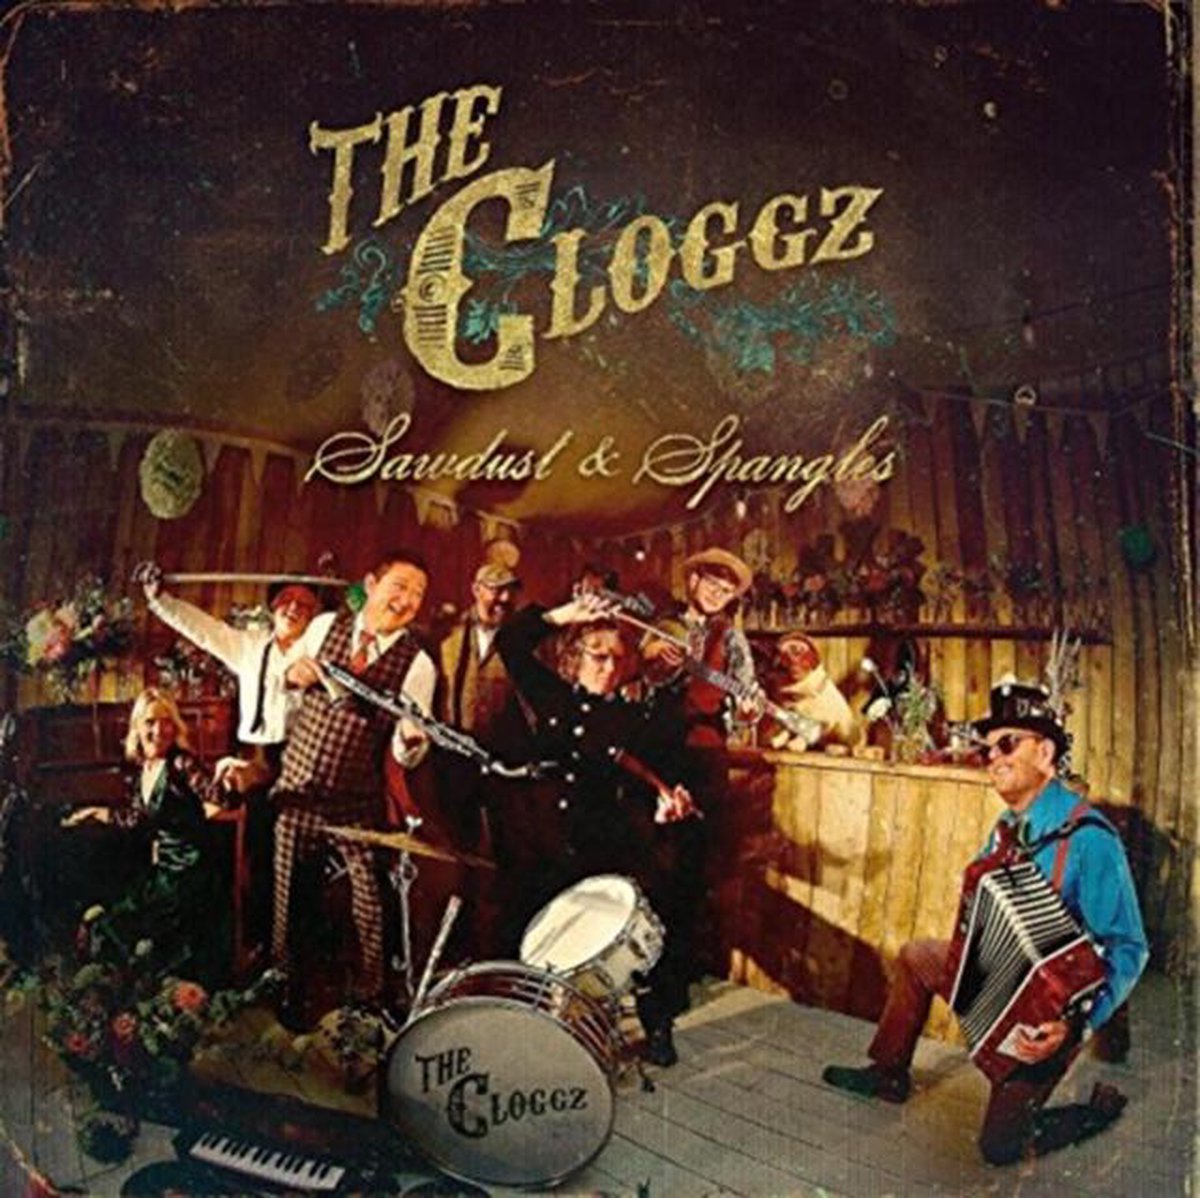 Sawdust & Spangles - The Cloggz